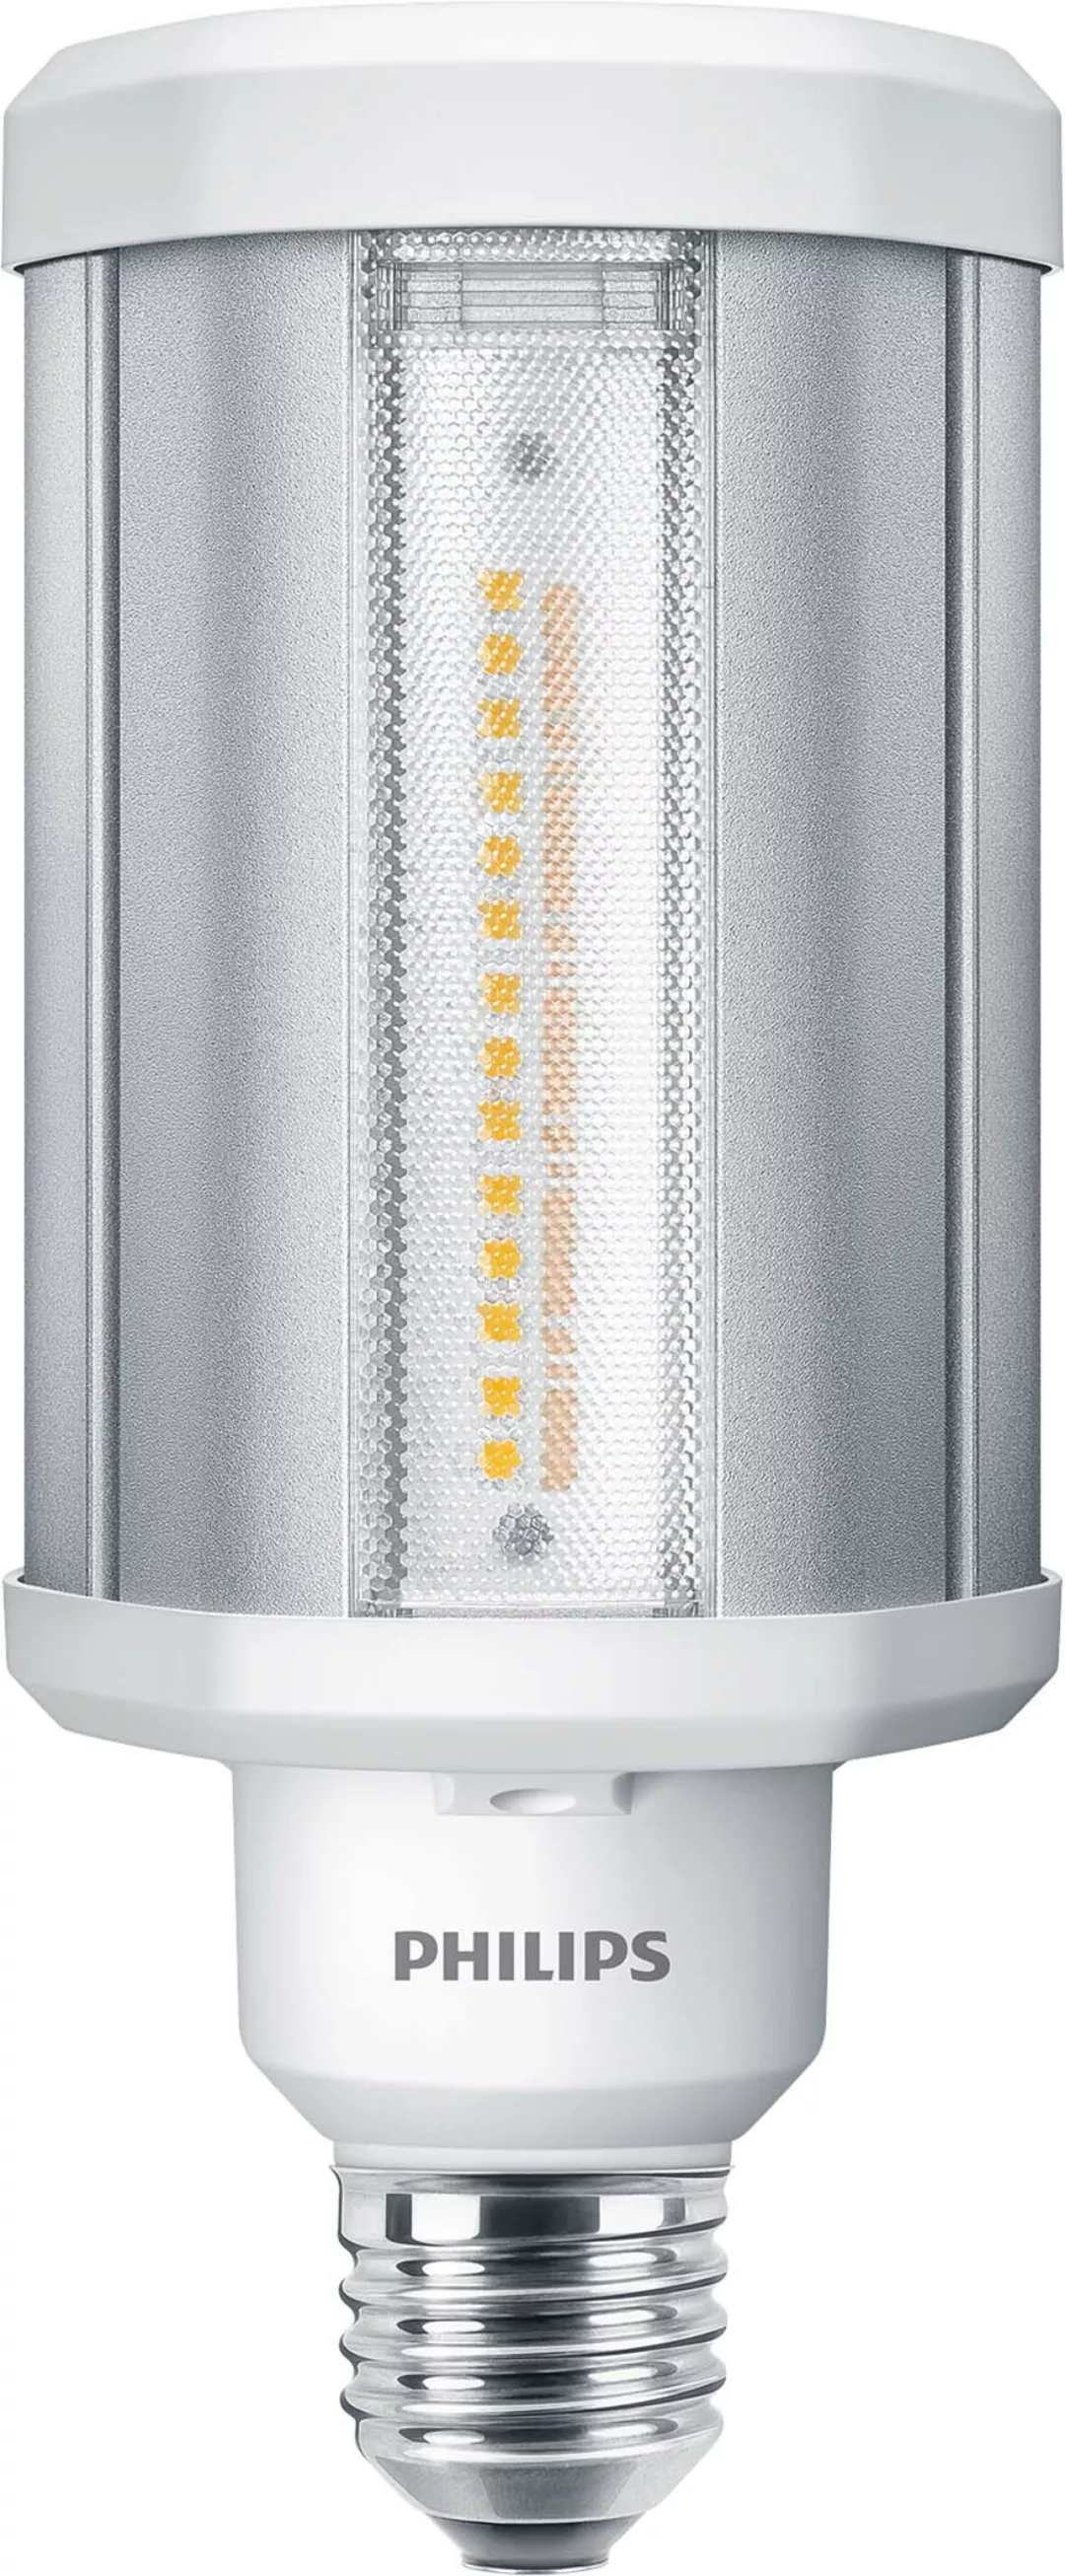 Philips Lighting LED-Lampe E27 4000K TForce LED #63824500 günstig online kaufen